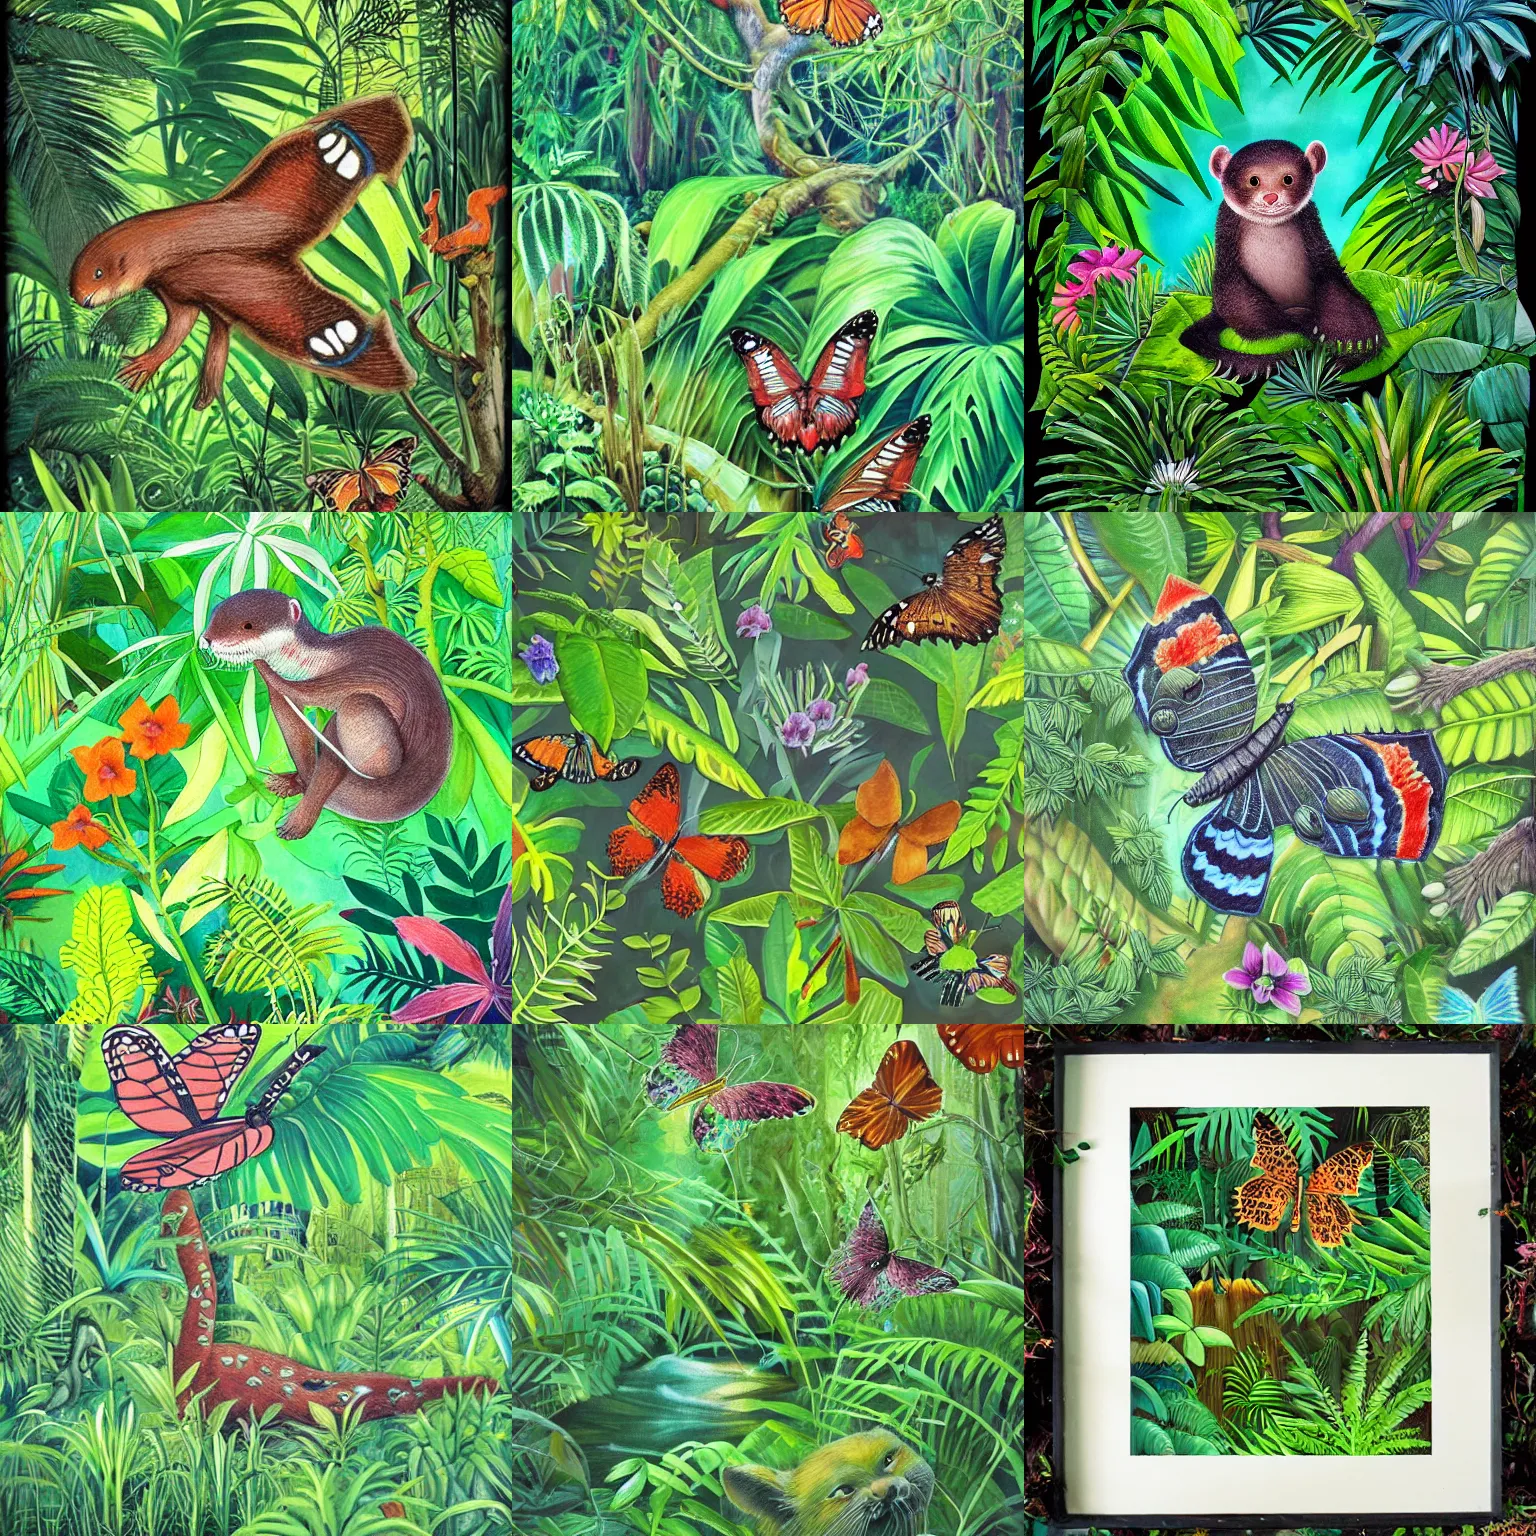 Prompt: lush jungle swamp, butterfly otter hybrid, playful, art, greenery, wildlife